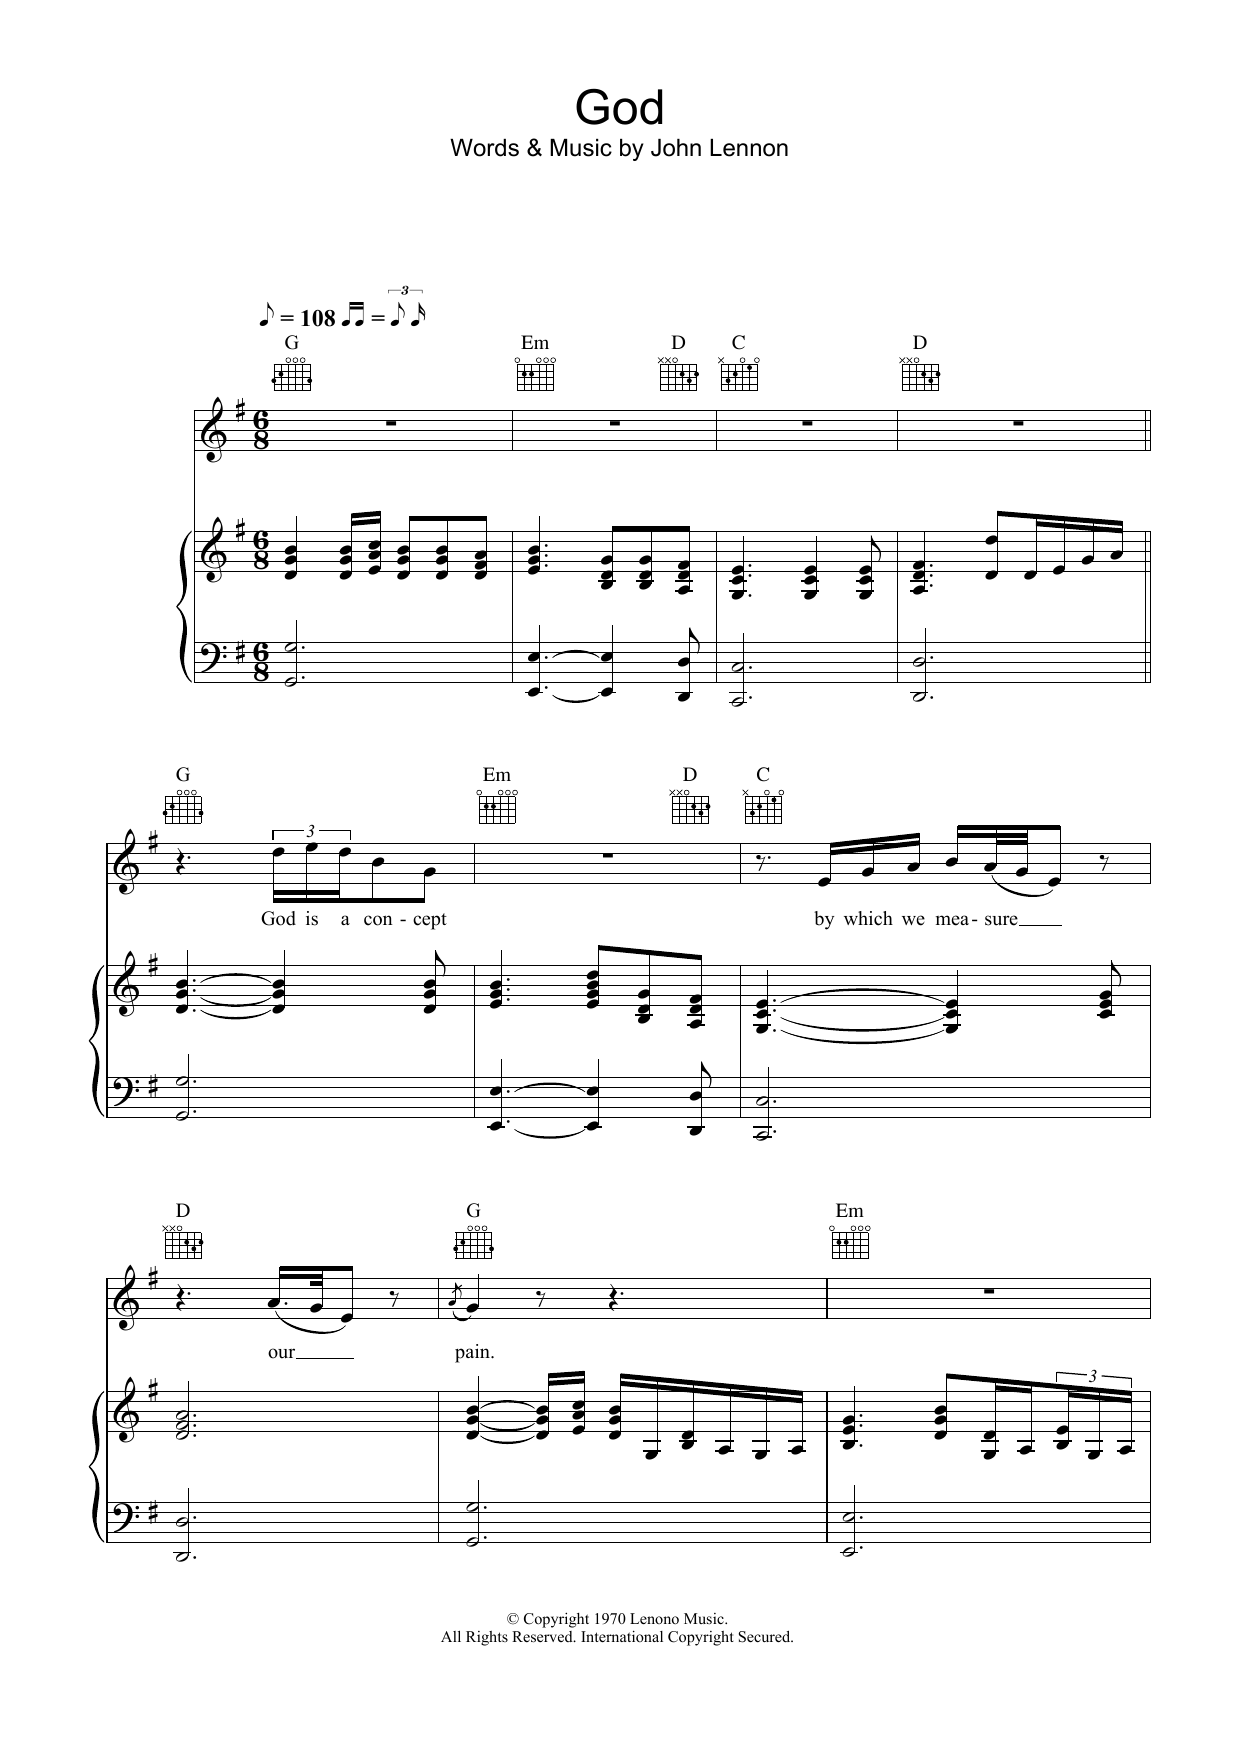 John Lennon God Sheet Music Notes & Chords for Melody Line, Lyrics & Chords - Download or Print PDF